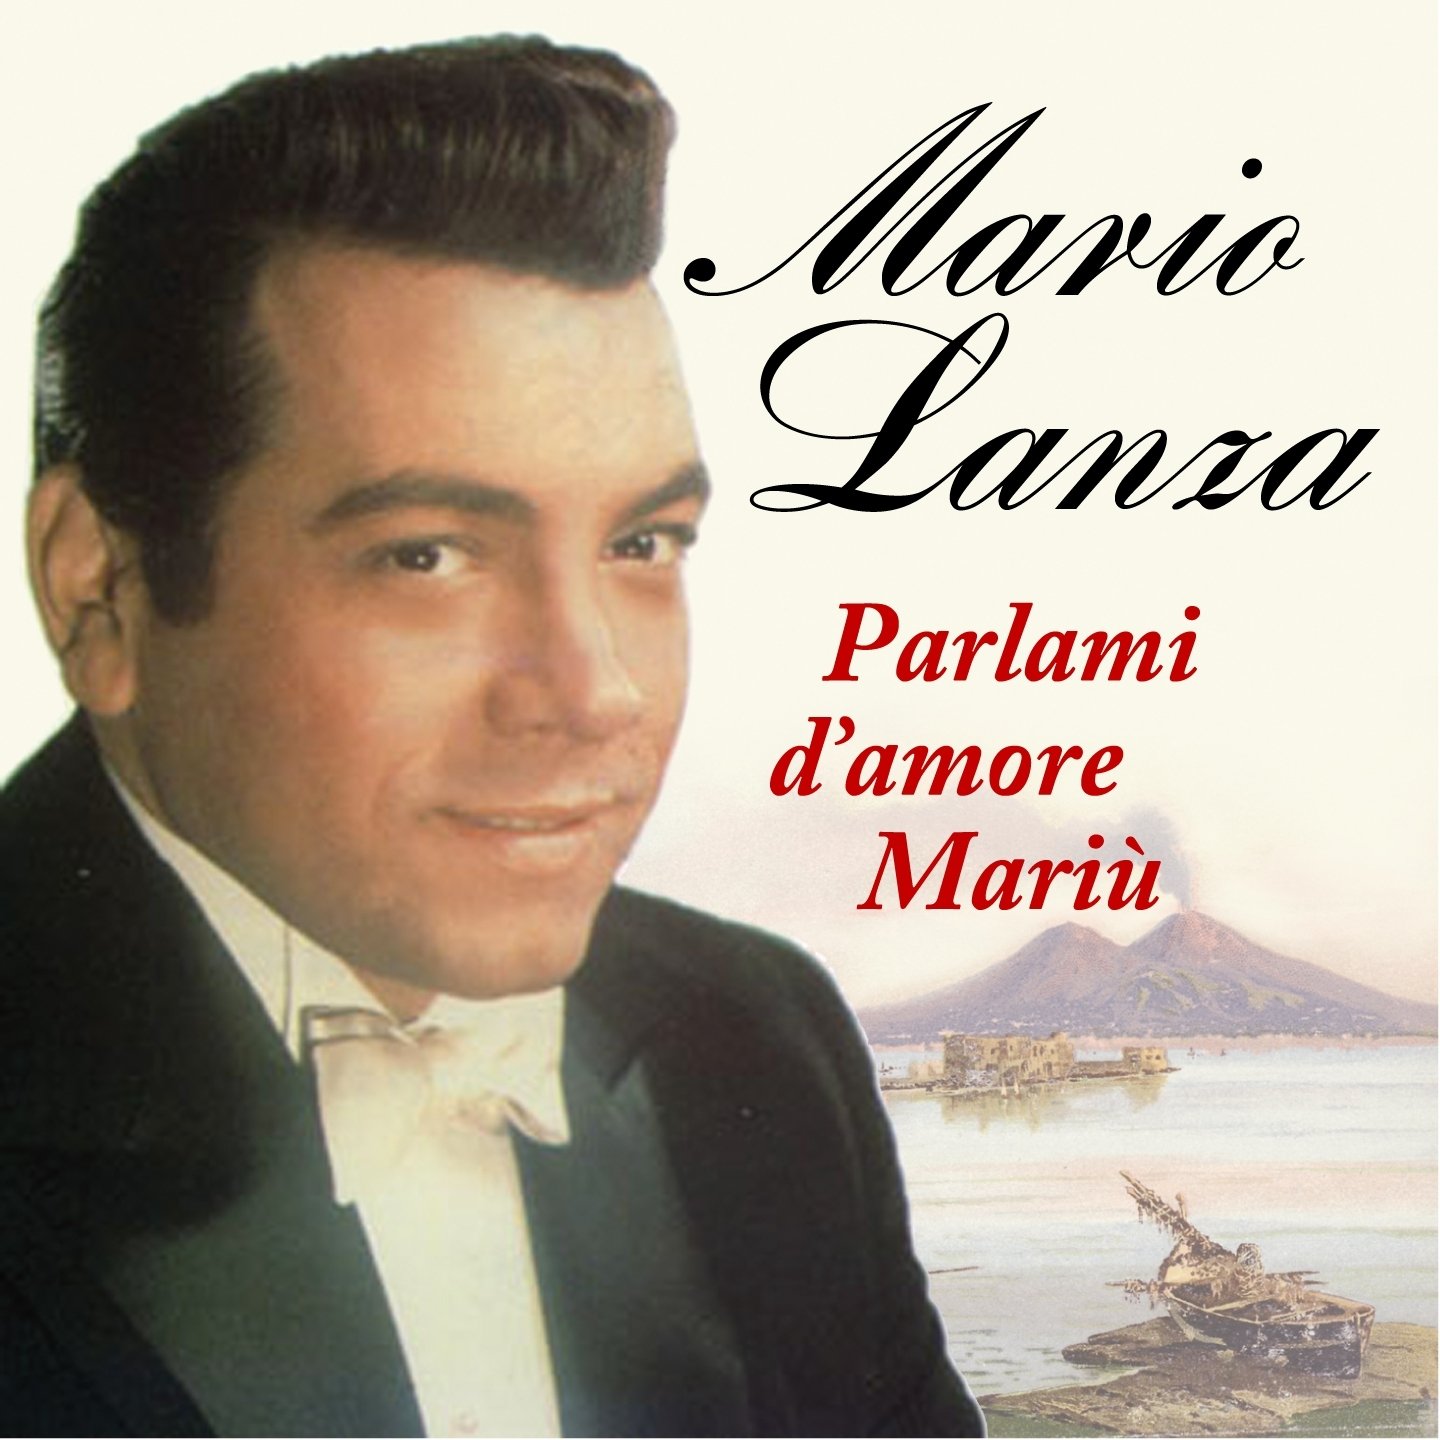 Amore mariu. Марио Ланца. Марио Ланца в Кармен. Марио Ланца альбомы. Творчество певца Марио Ланца.